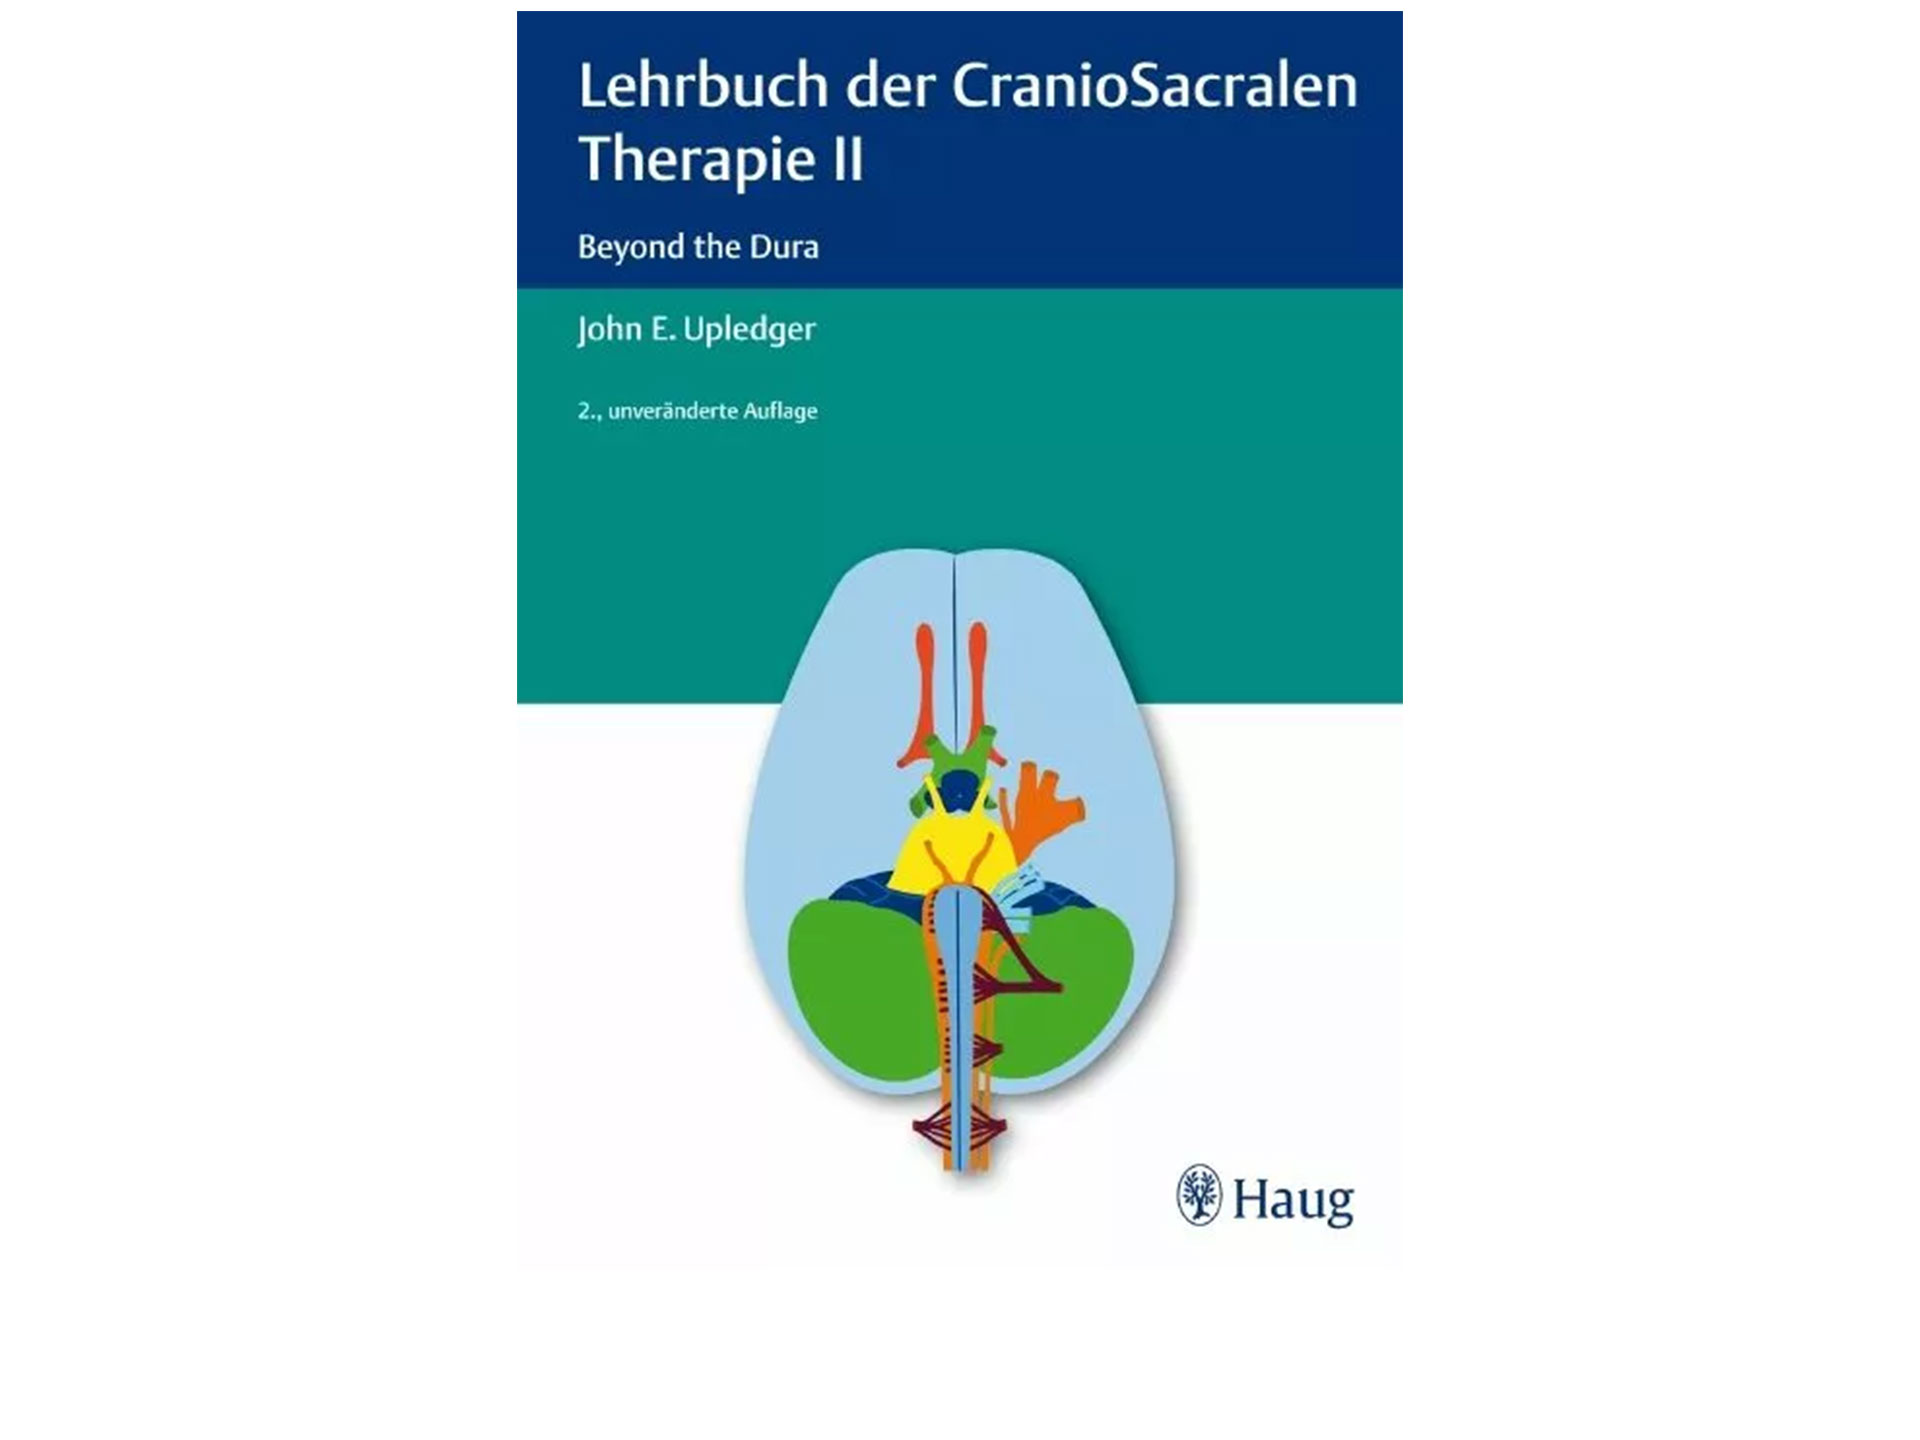 Lehrbuch der CranioSacralen Therapie II